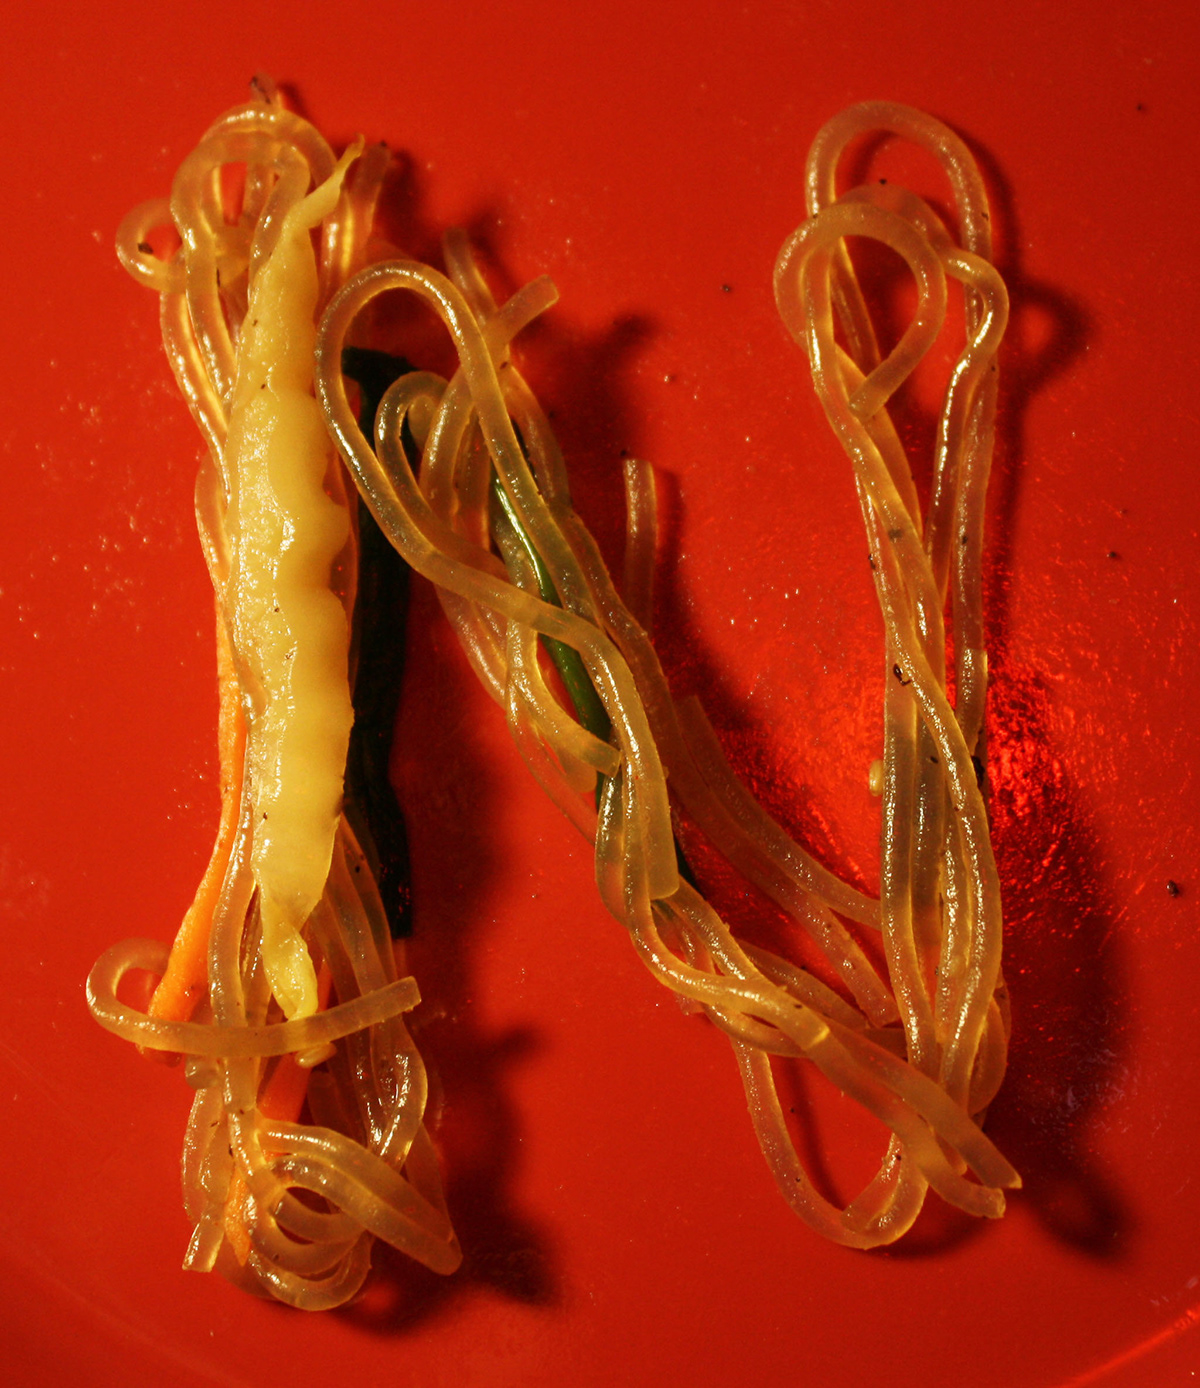 Human Alphabet noodles